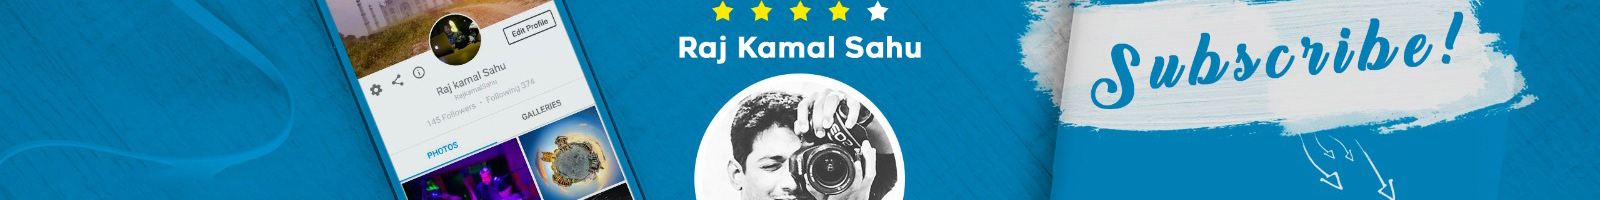 Banner de perfil de Raj Kamal Sahu